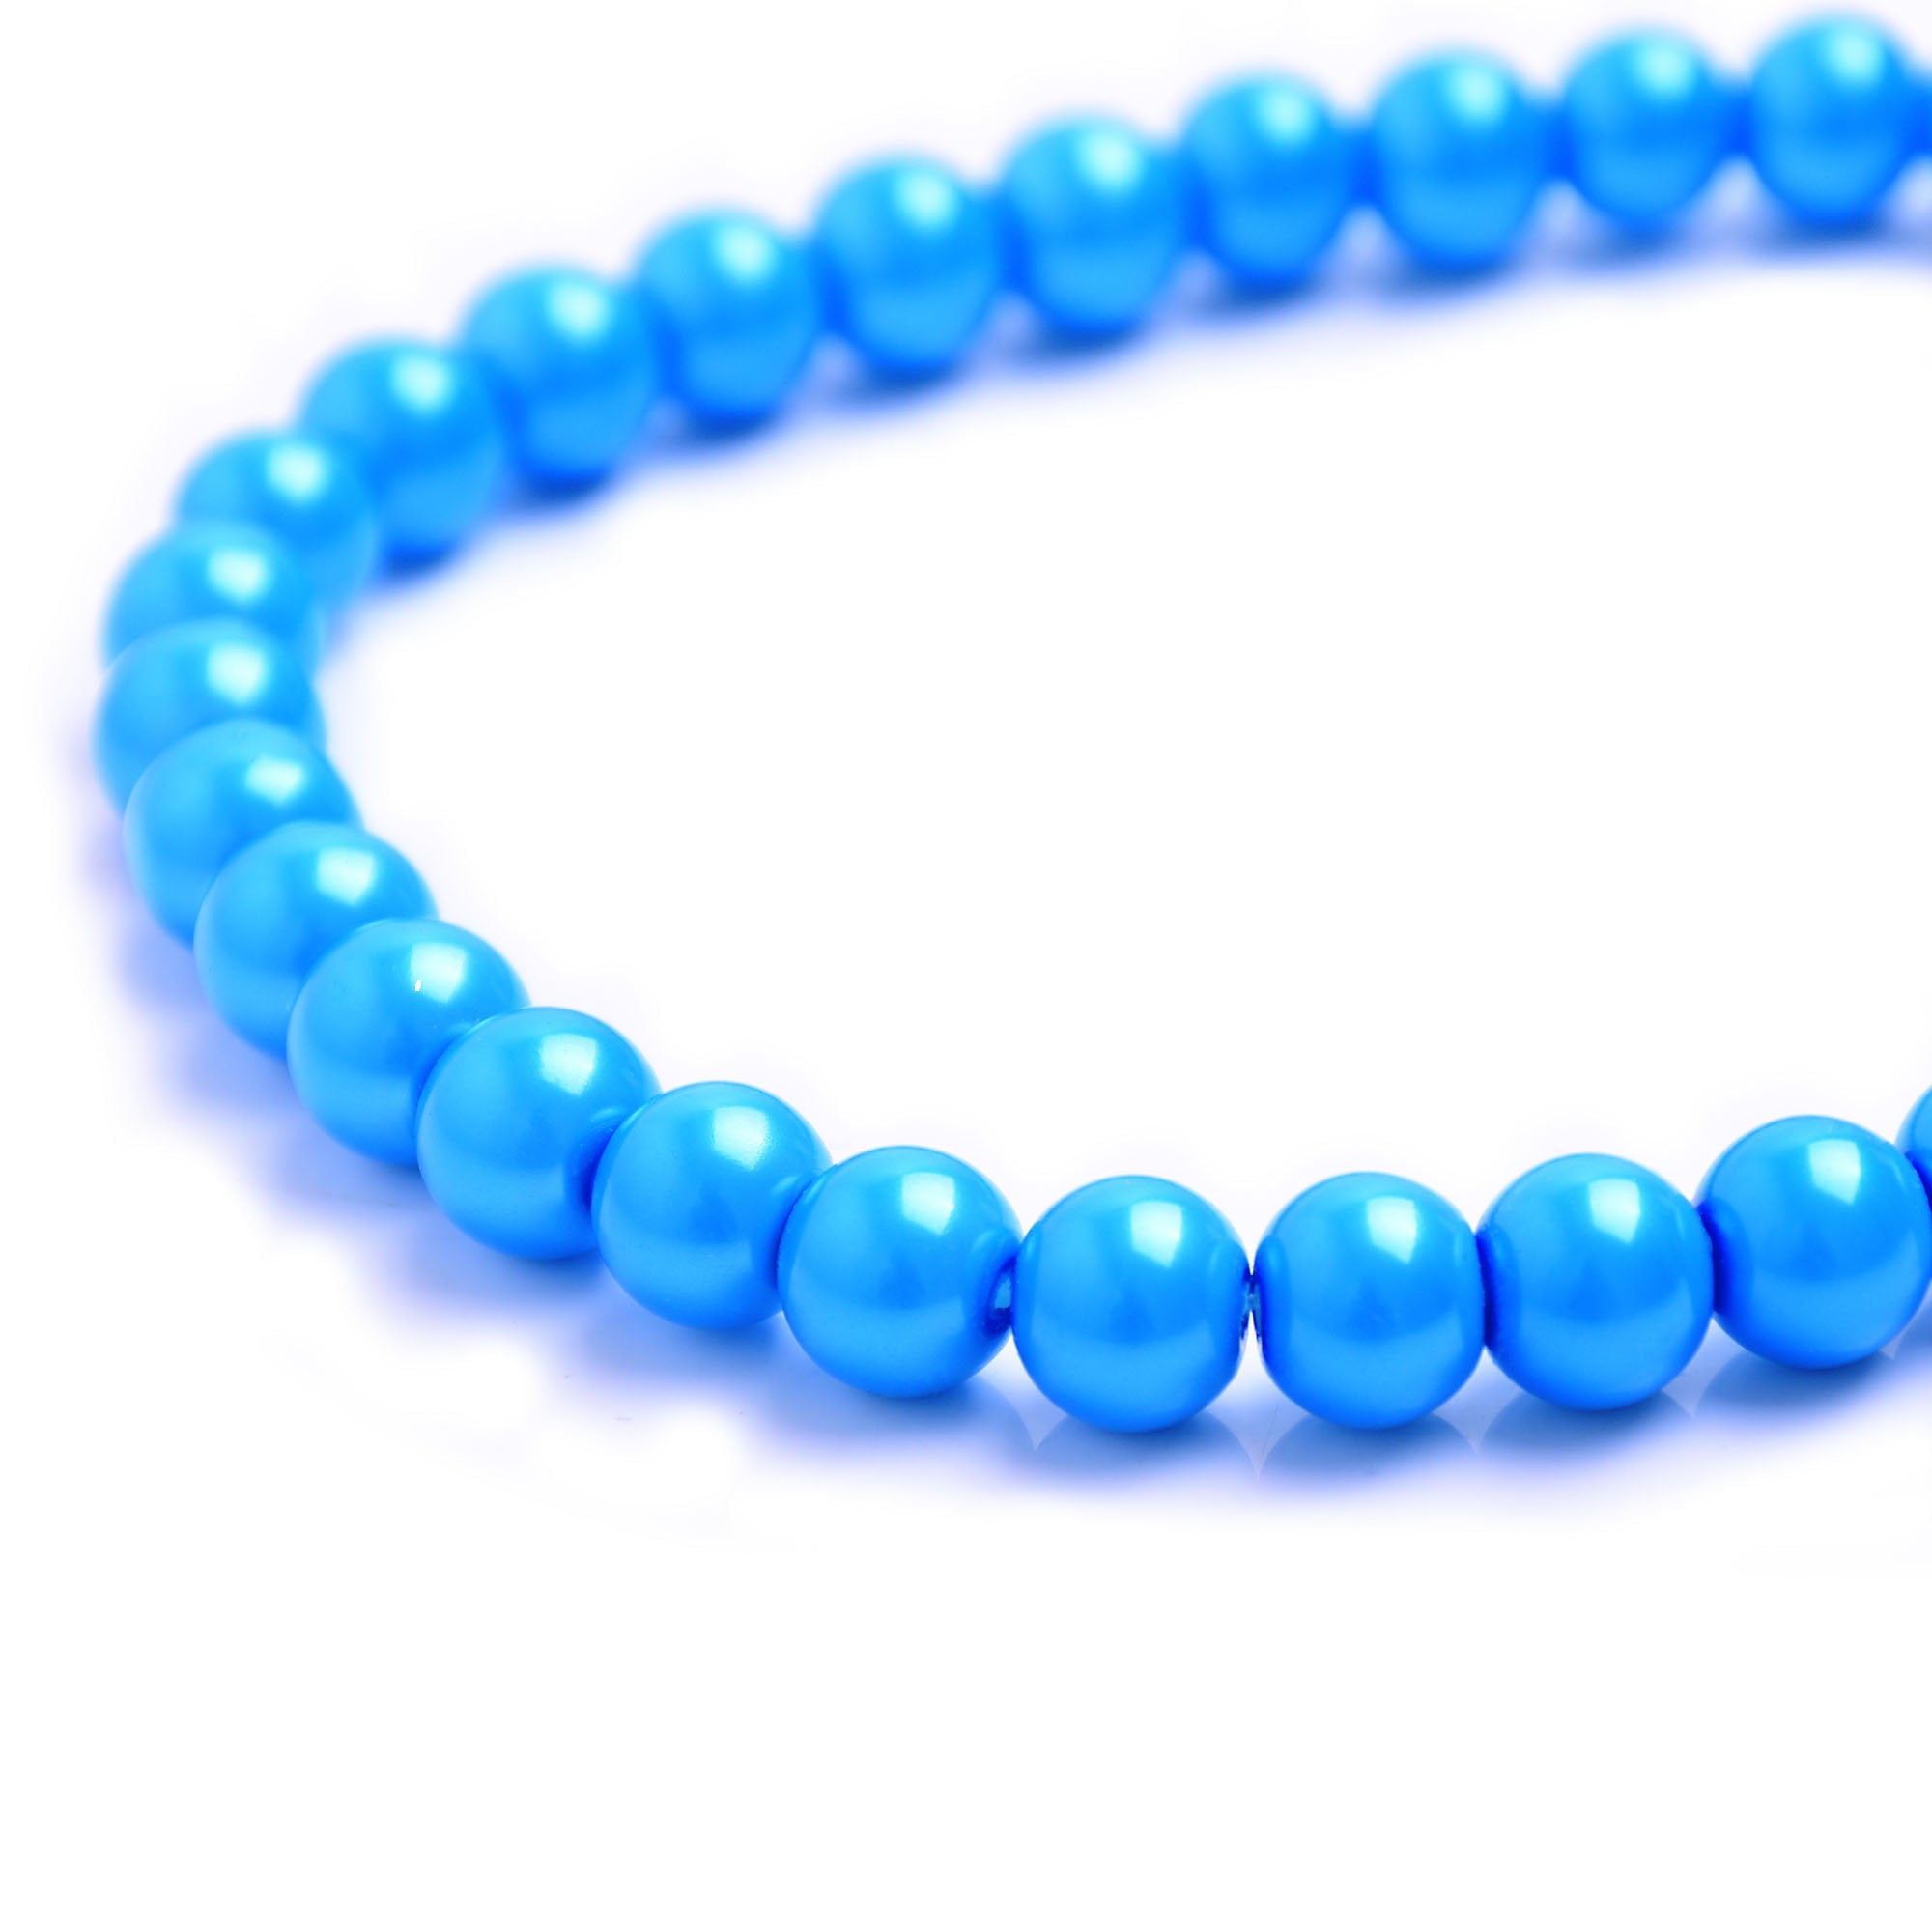 100 Loose Glass Blue Orange Elements Beads Round 10mm Jewellery/Craft Making 